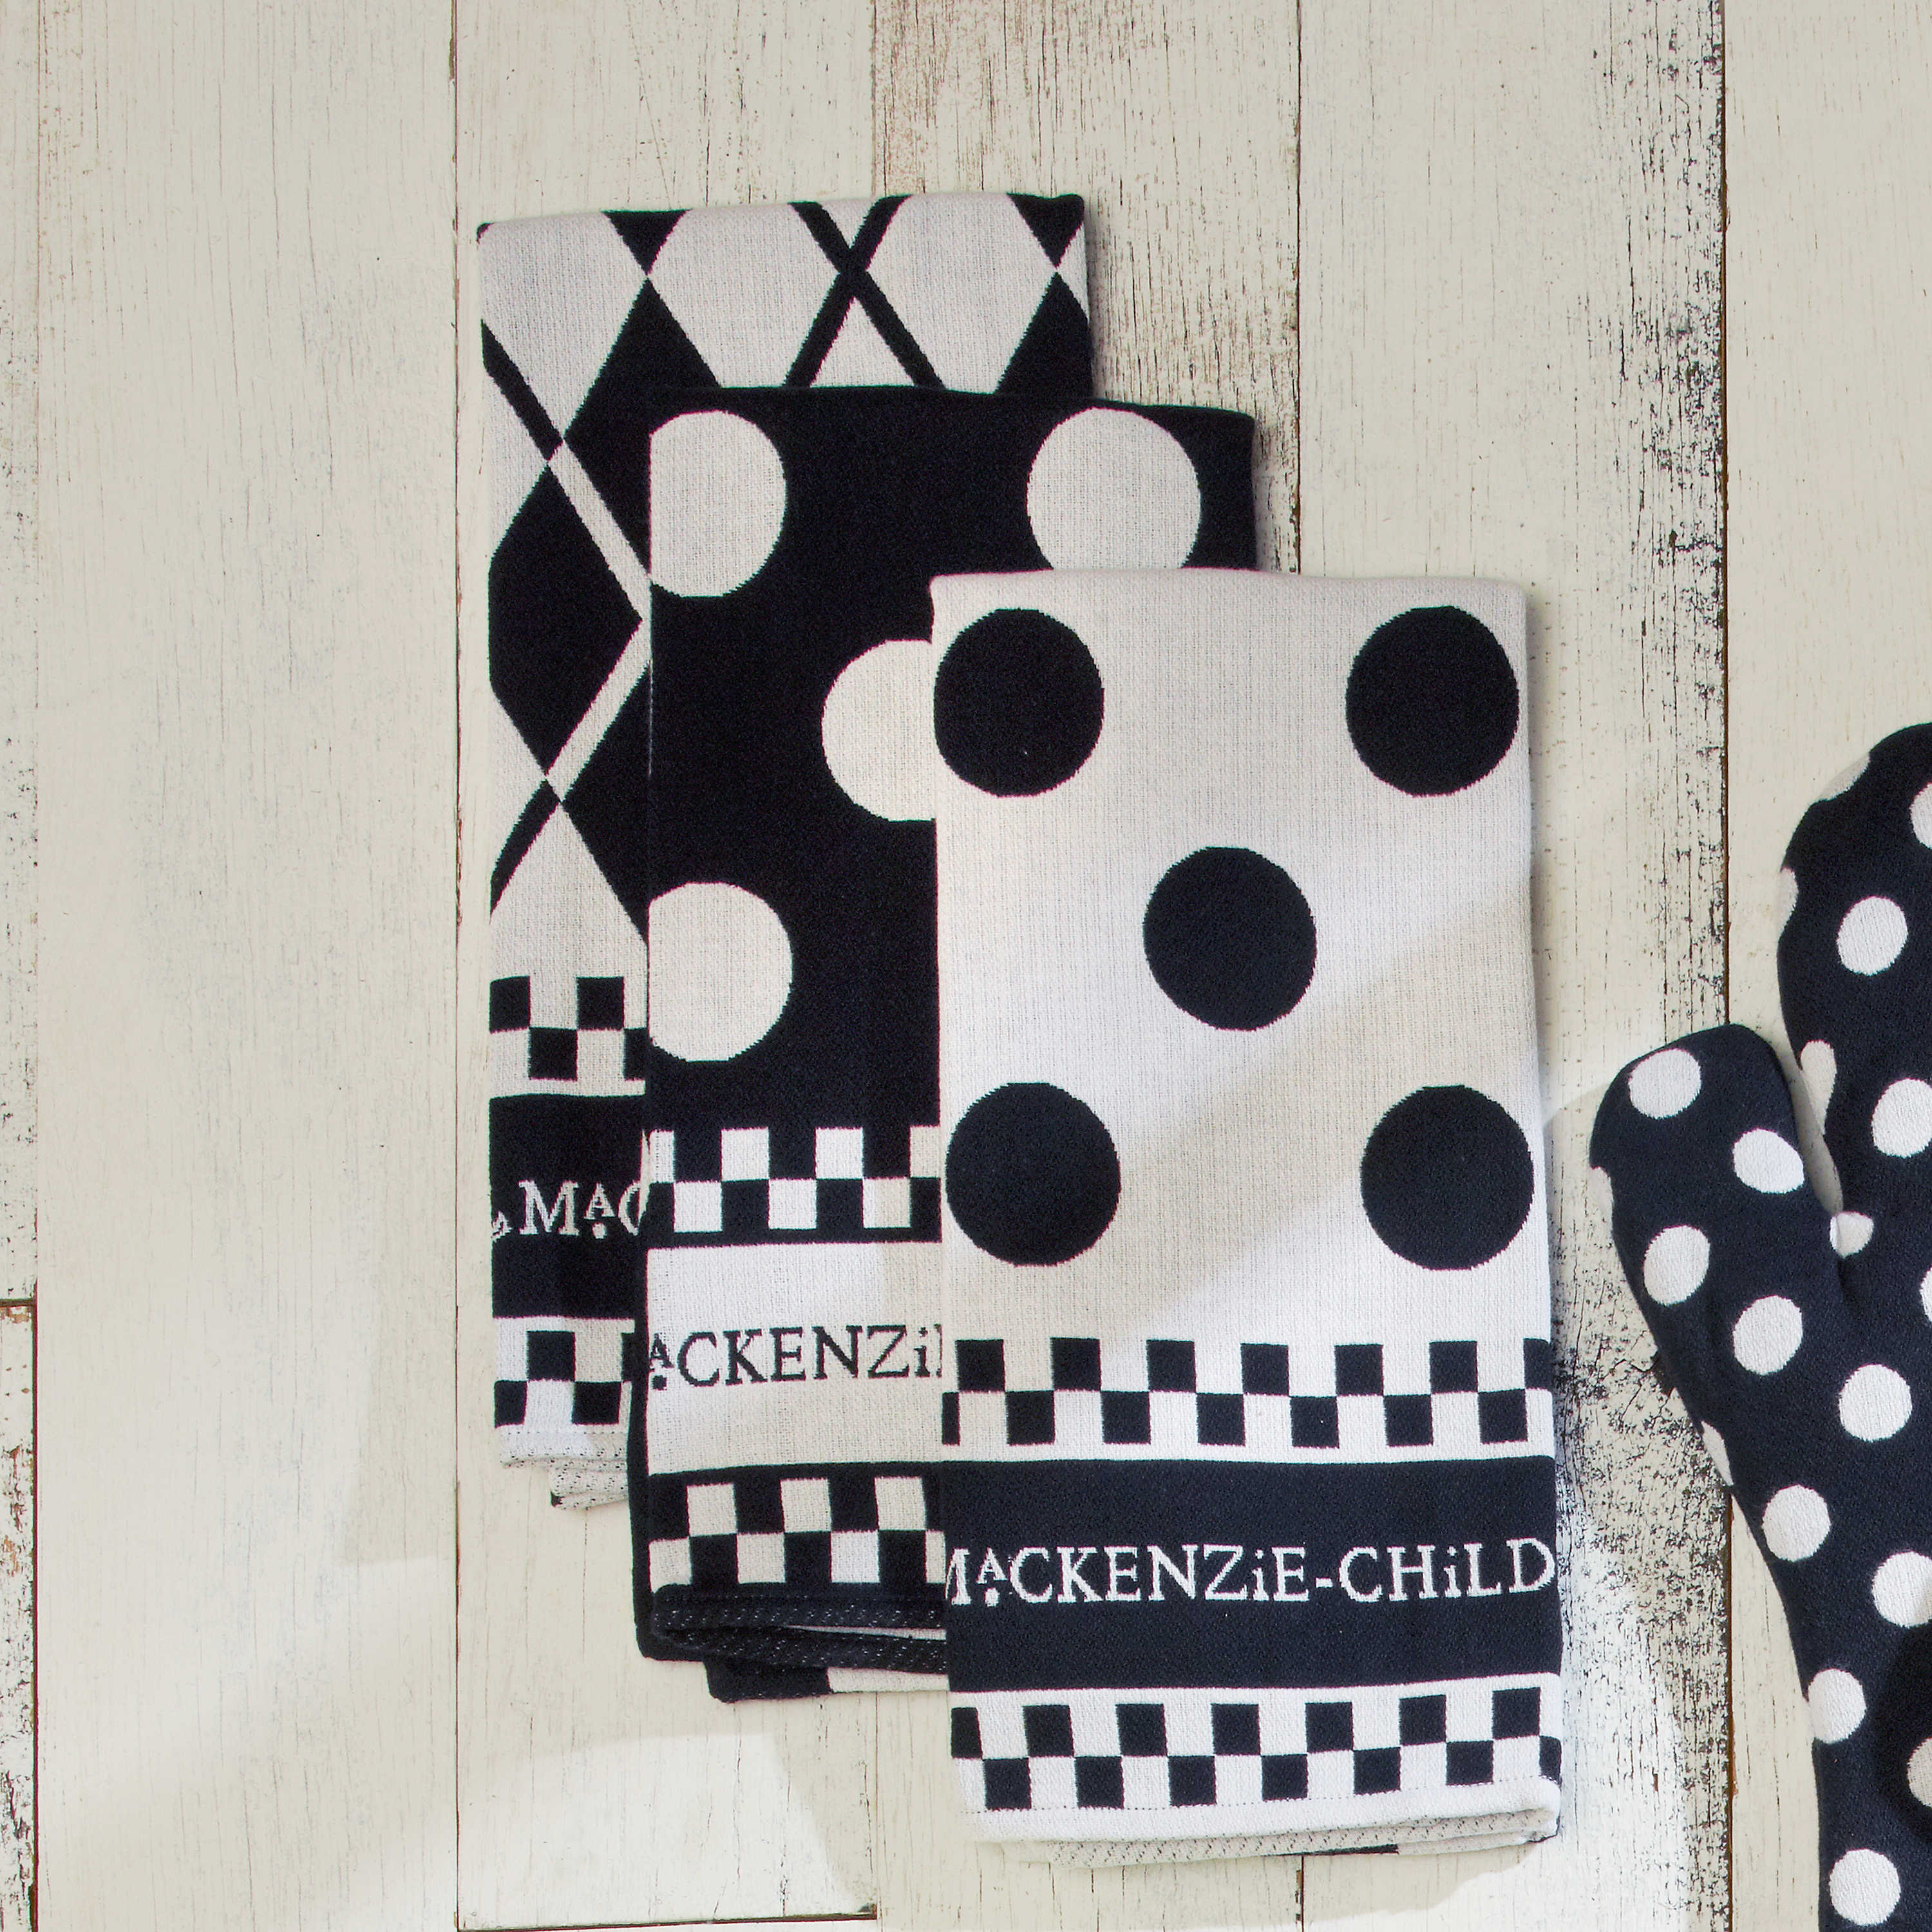 Black & White Dot Dish Towels, Set of 3 - Mackenzie-Childs